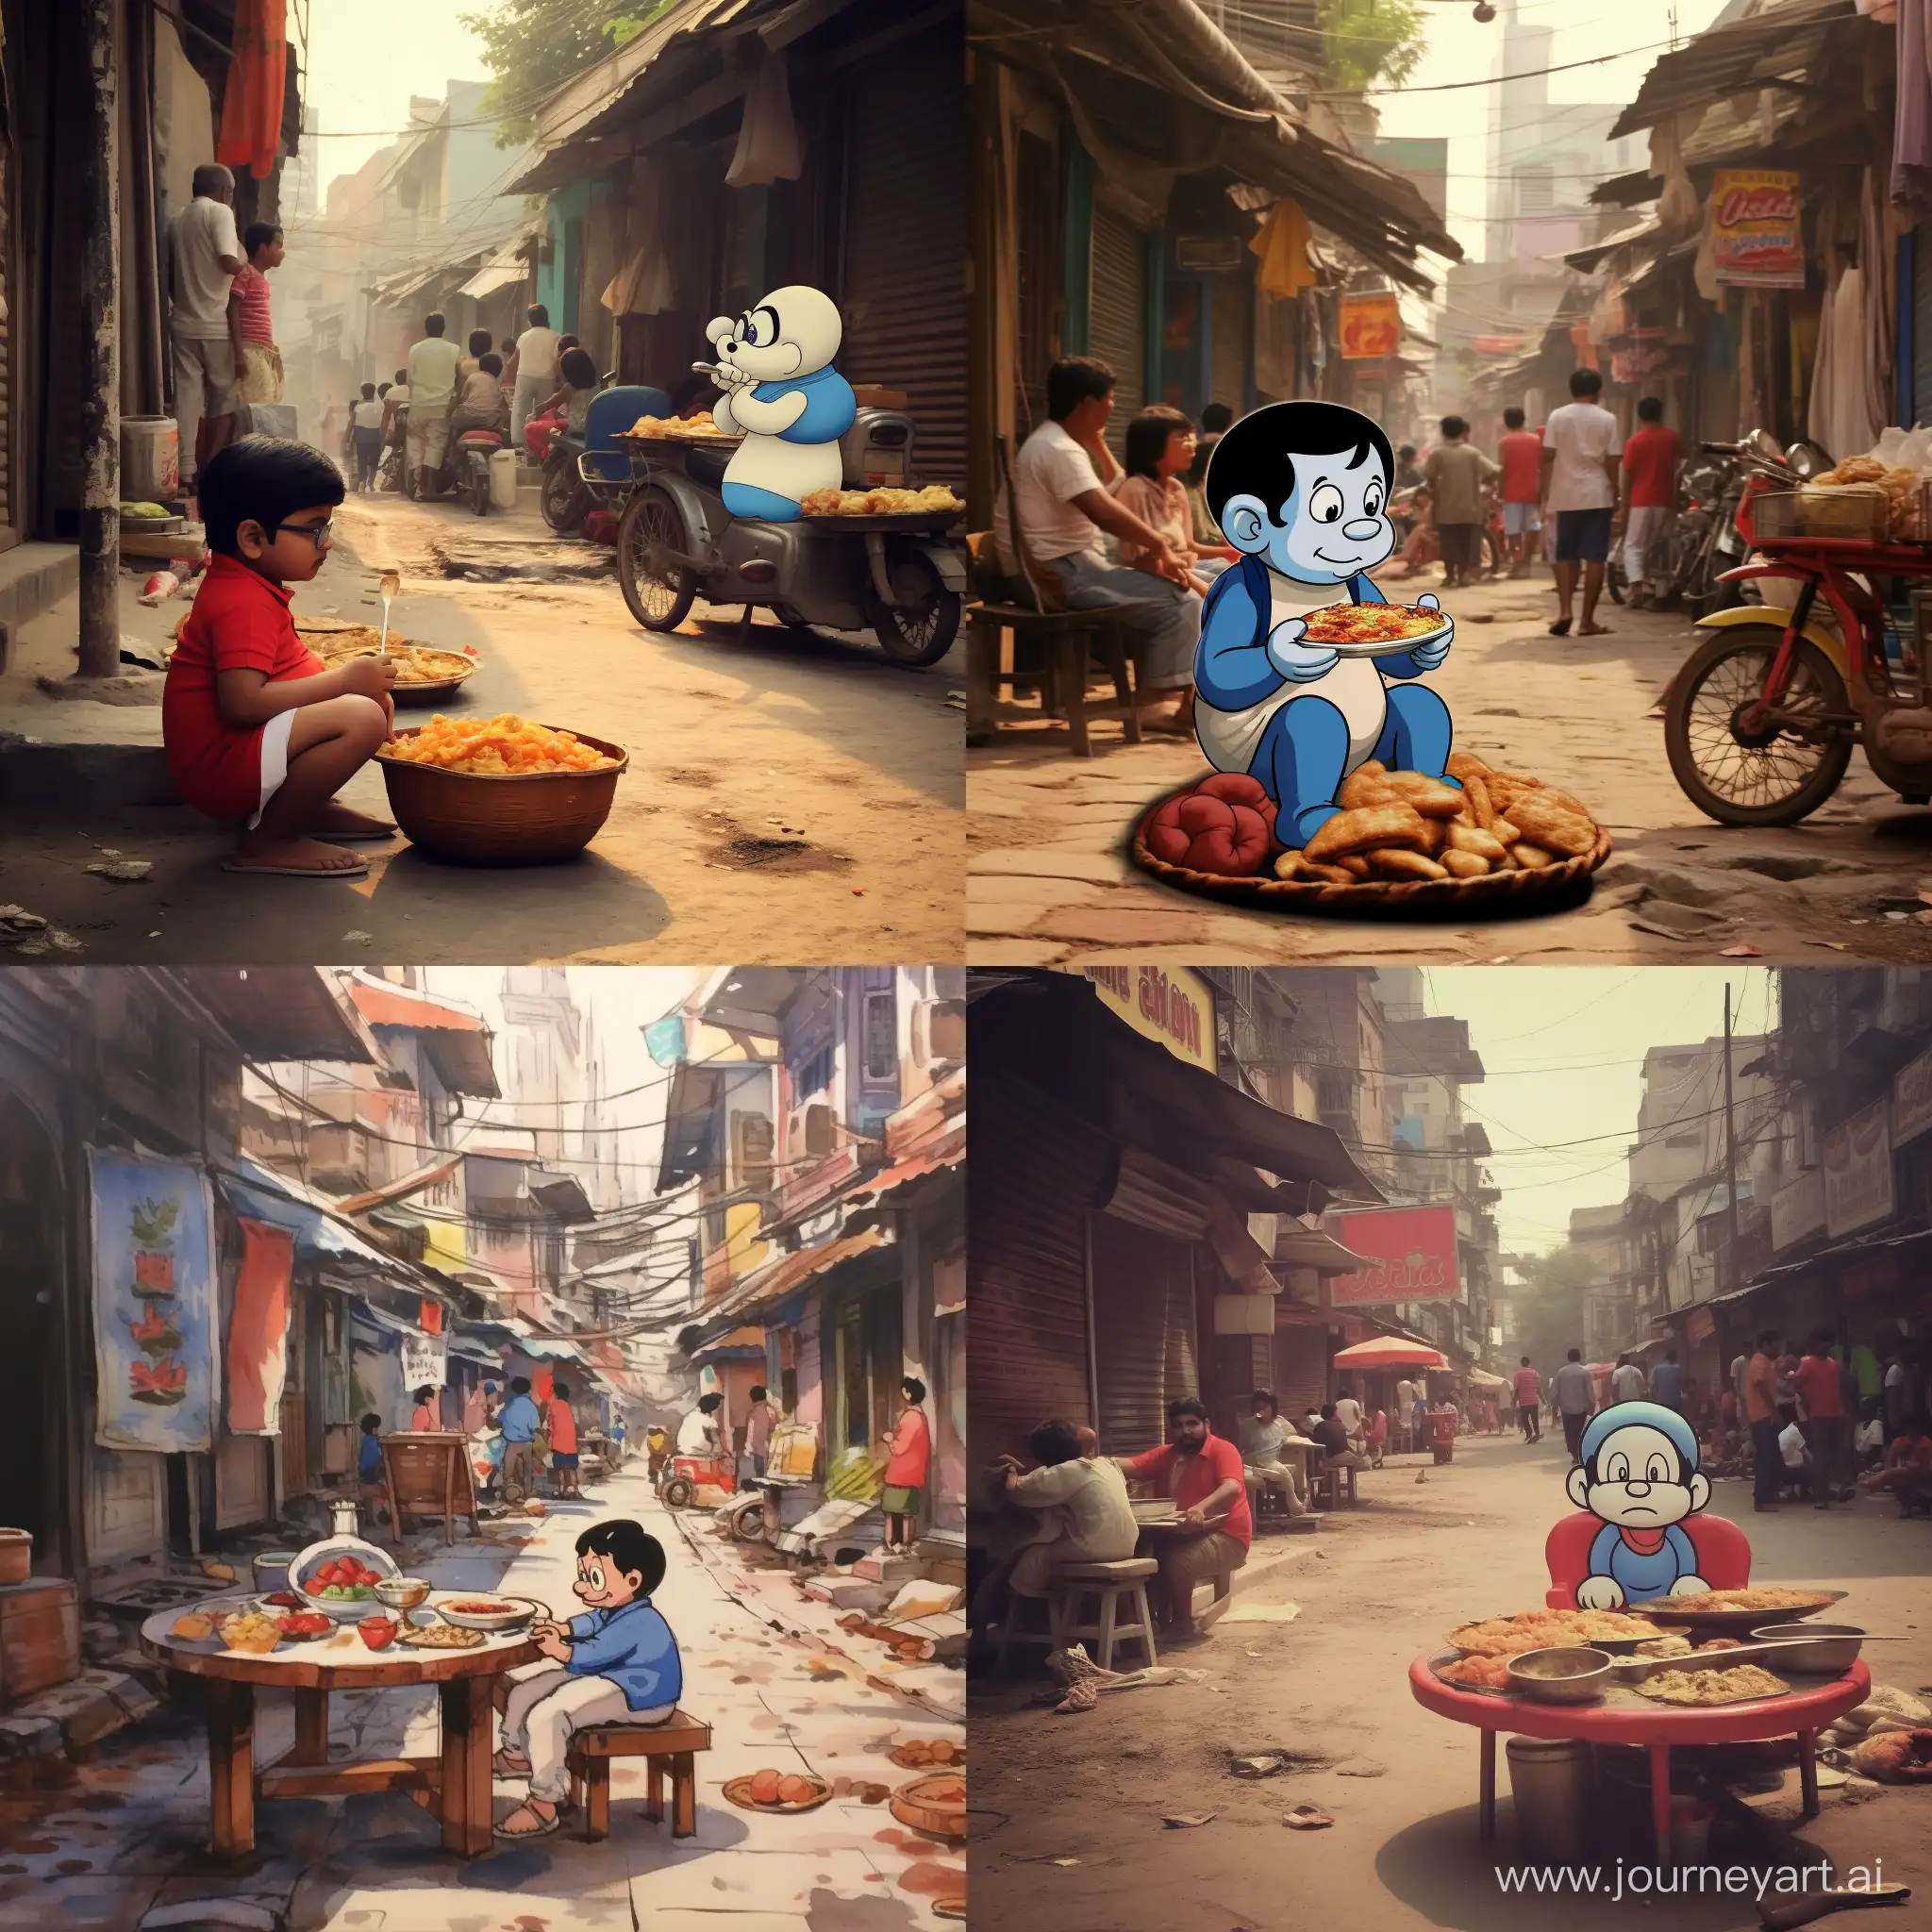 Doraemon-Enjoying-Street-Food-Delight-in-Delhi